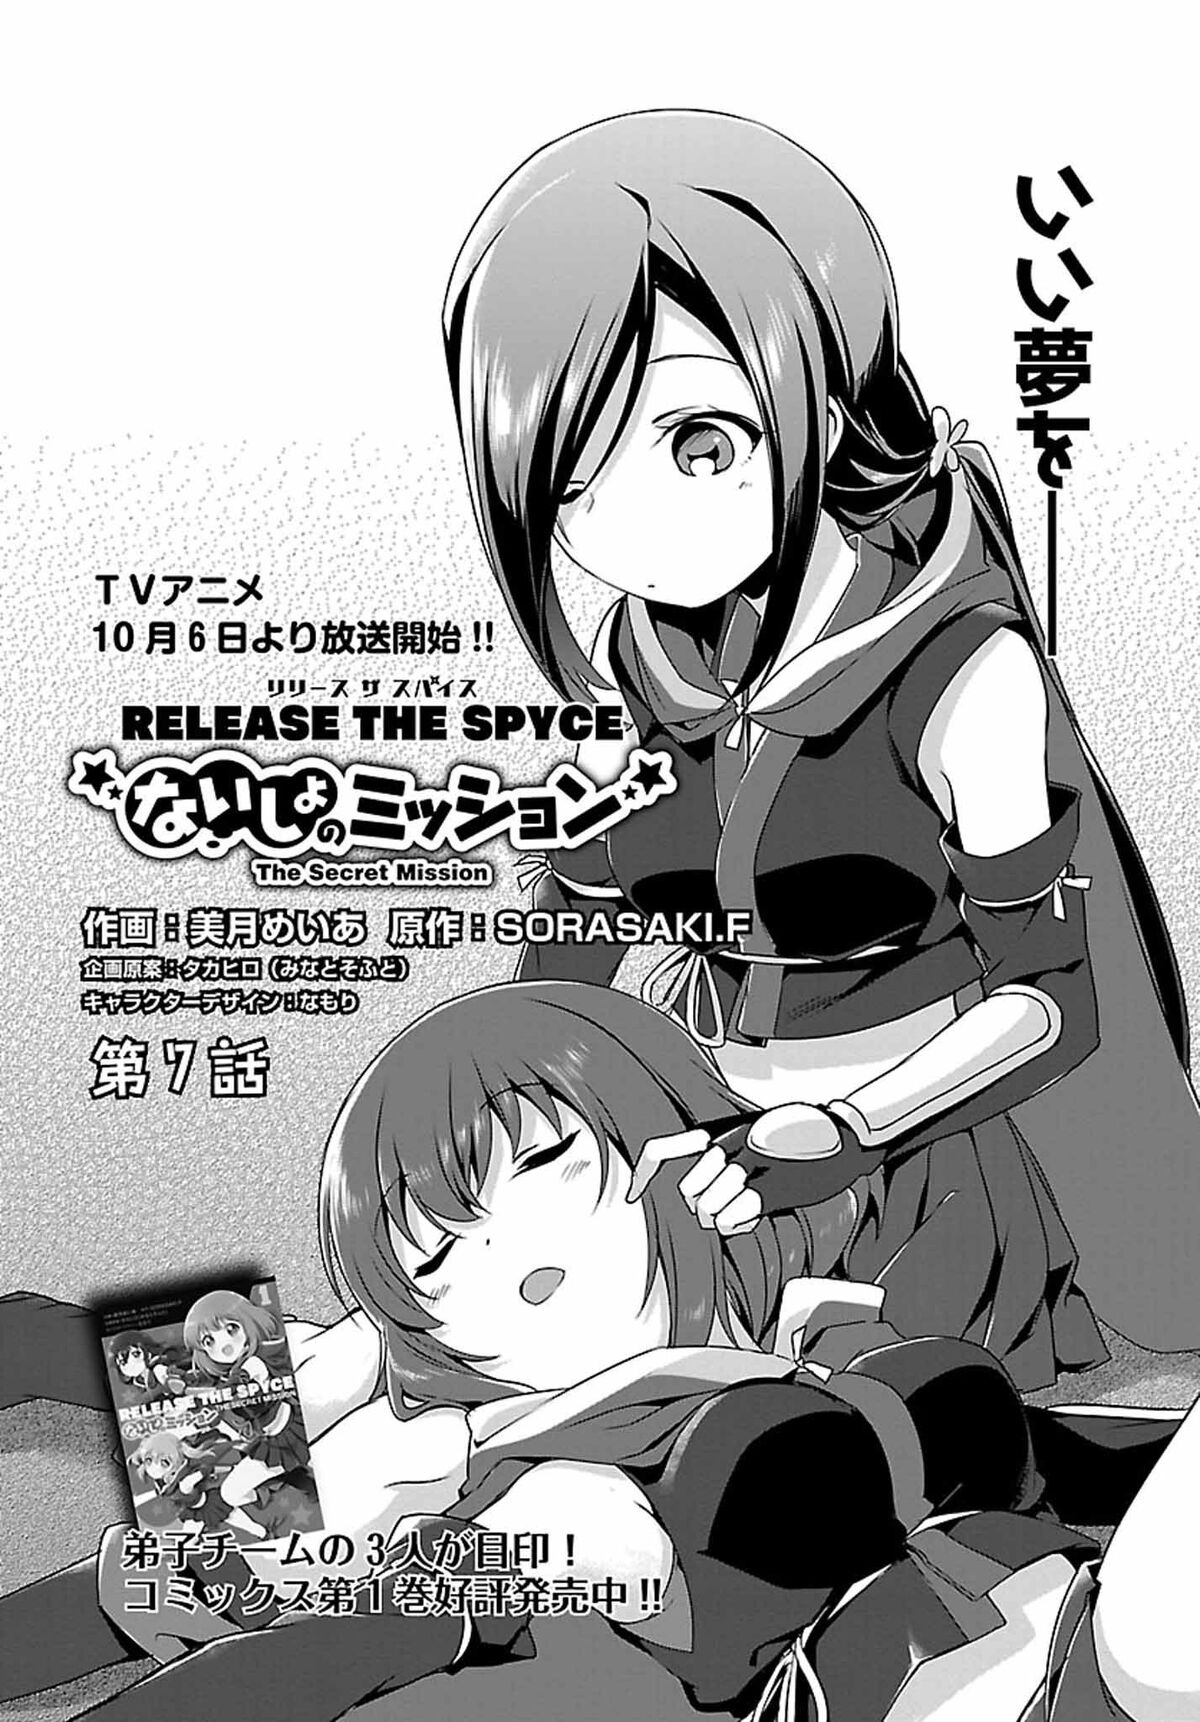 Manga Chapter 7 Release The Spyce Wiki Fandom